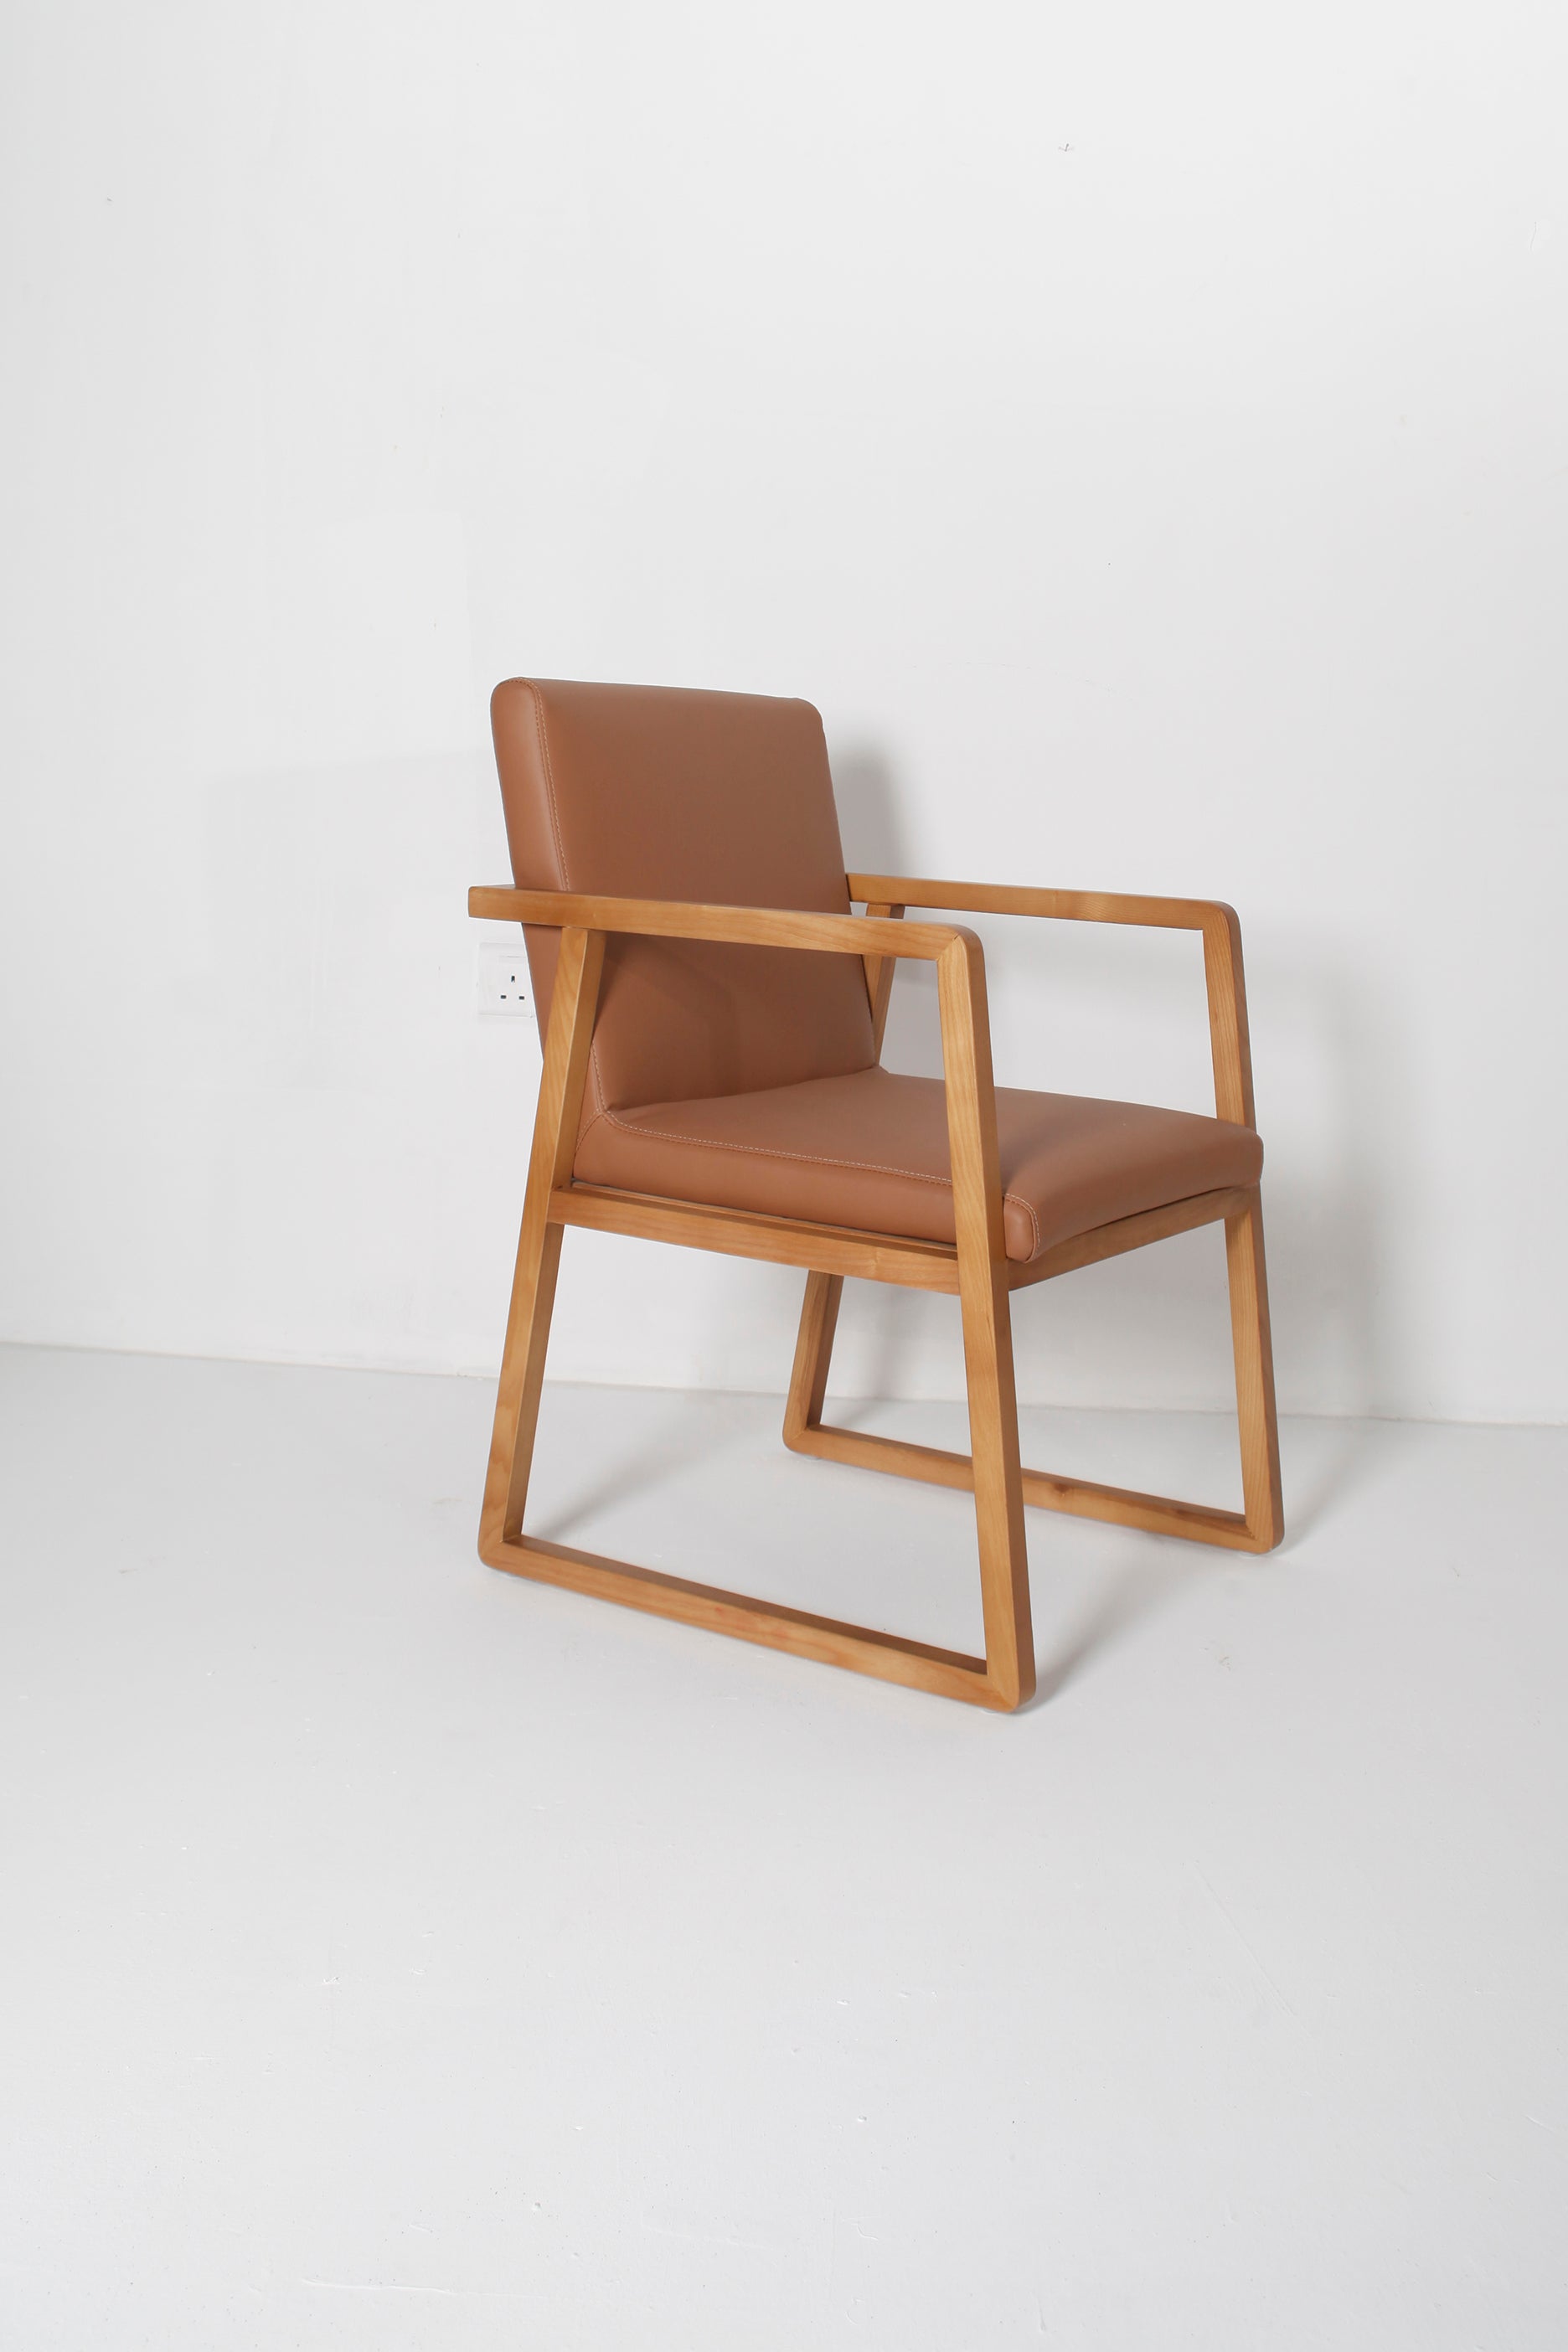 Wood & PU Leather Chair